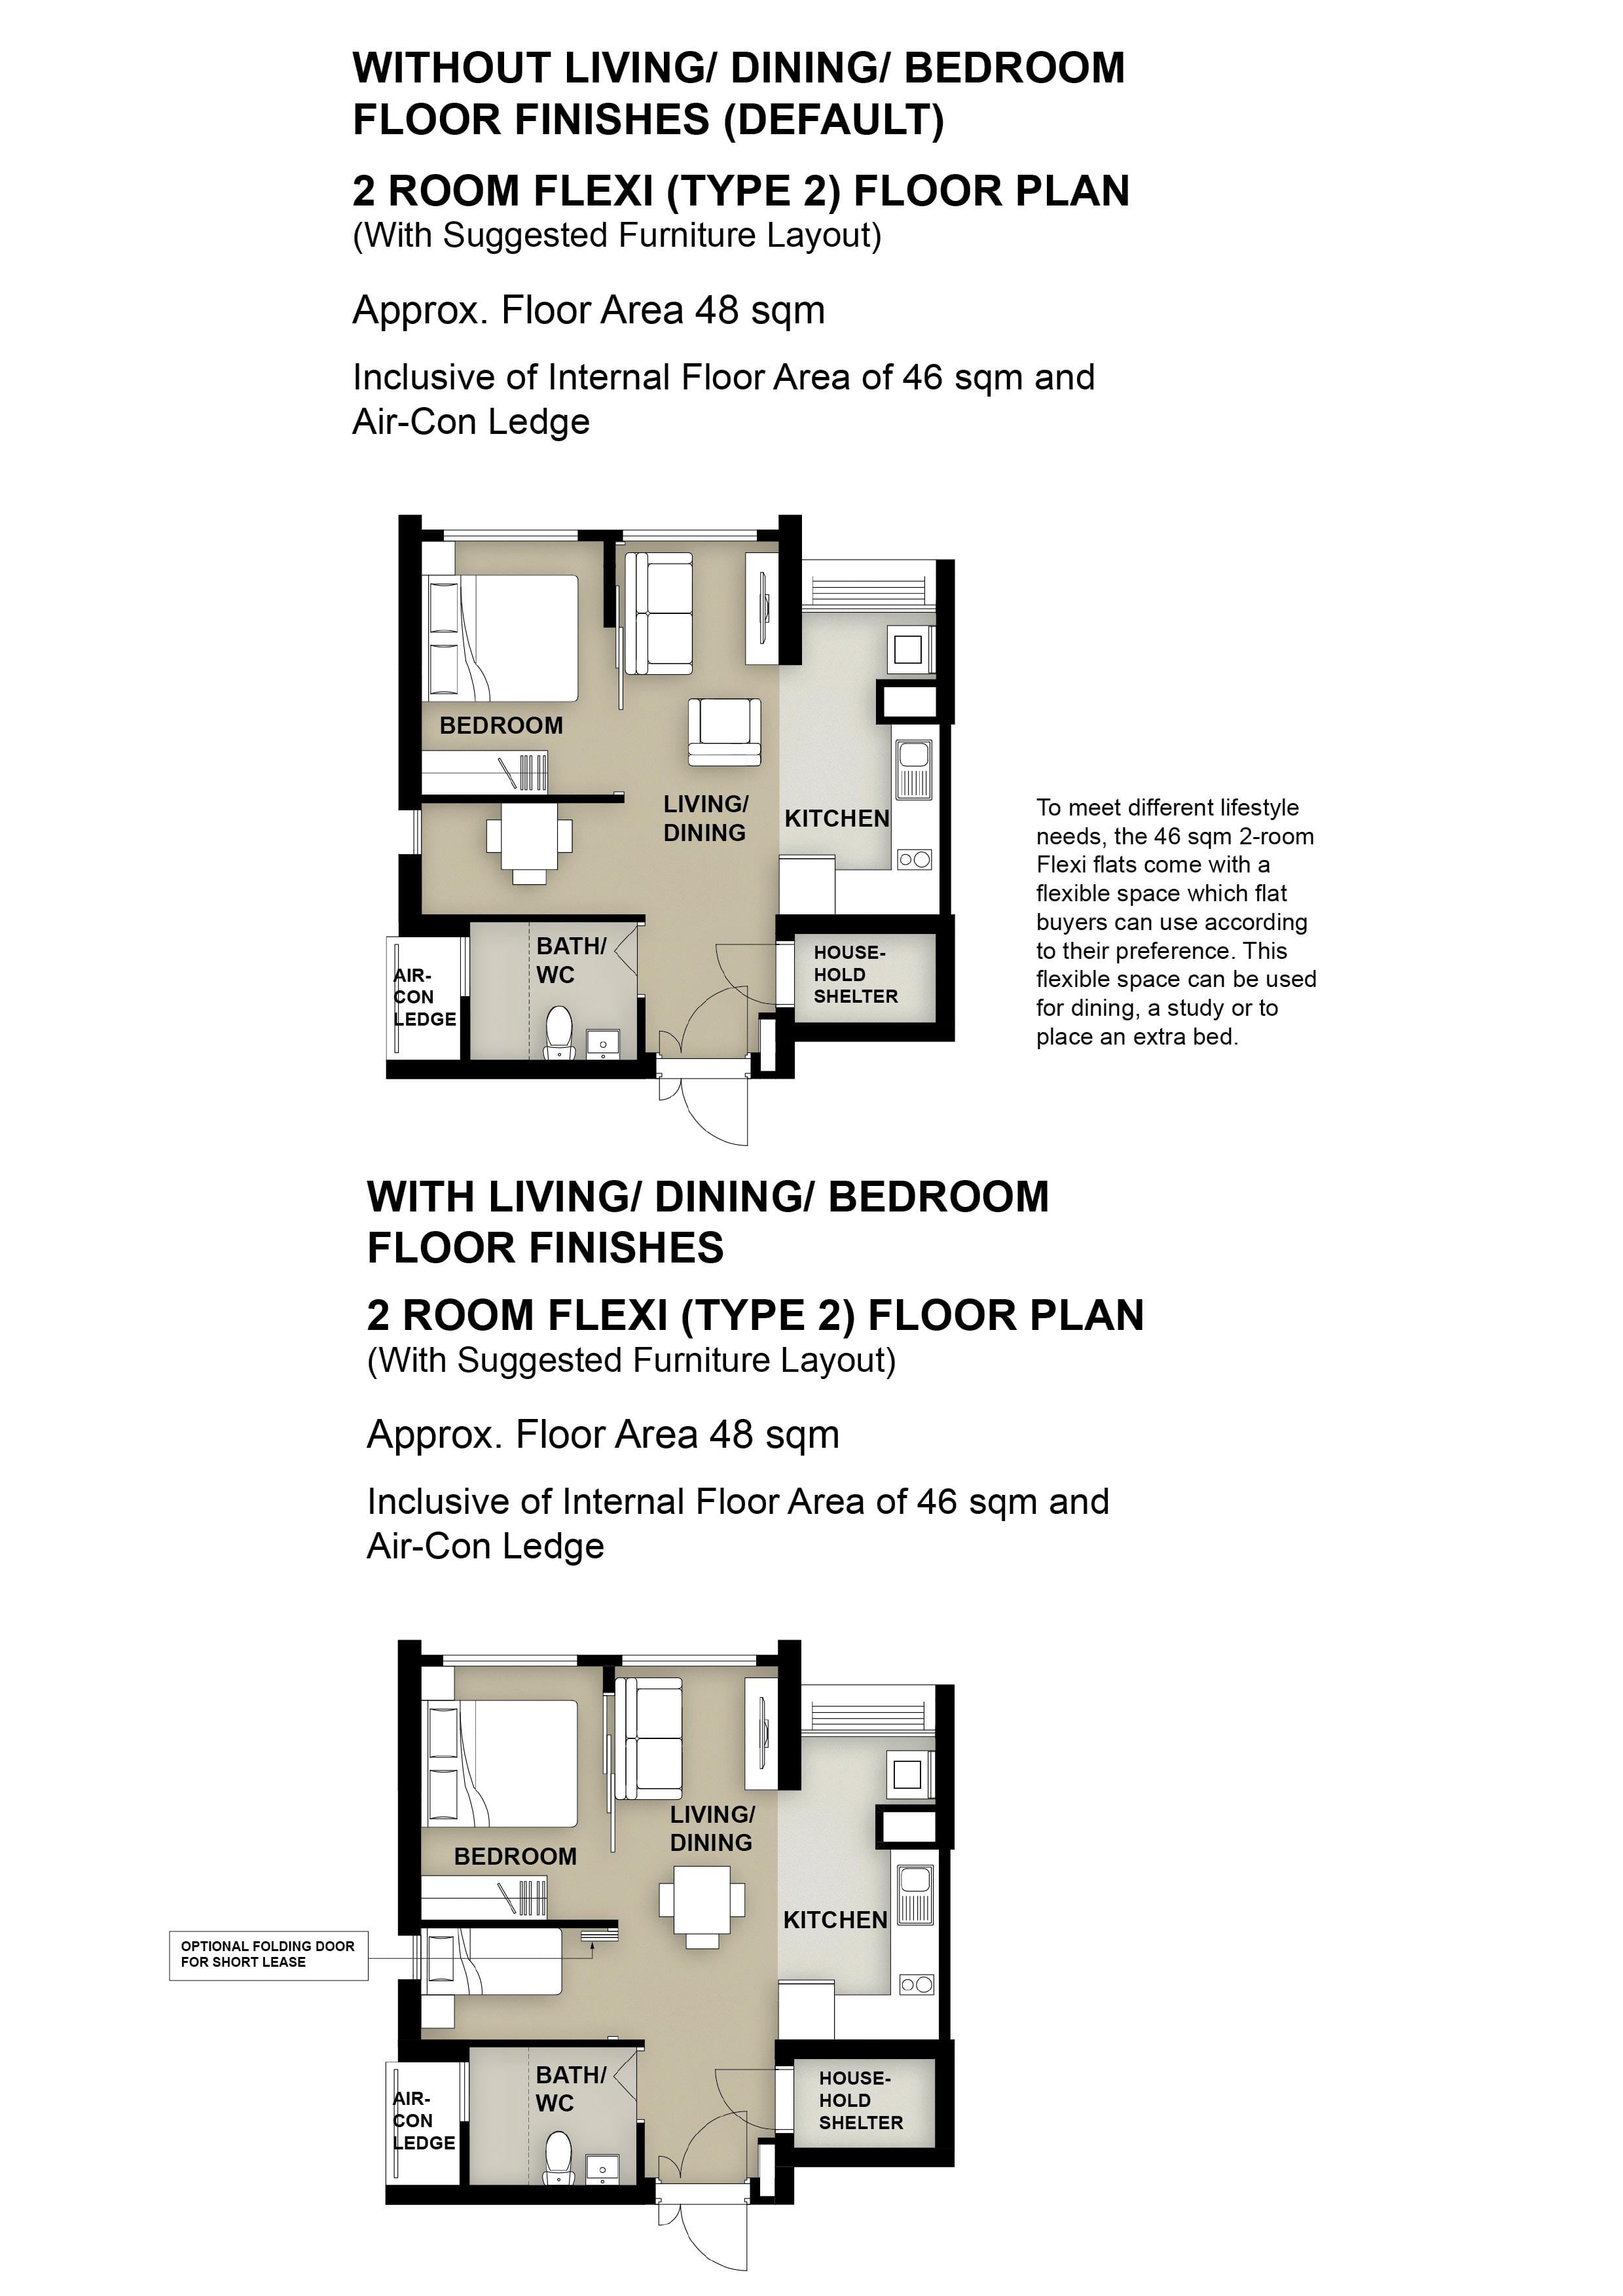 Central Weave @ AMK 2 Room Flexi Type 2 Floor Plan